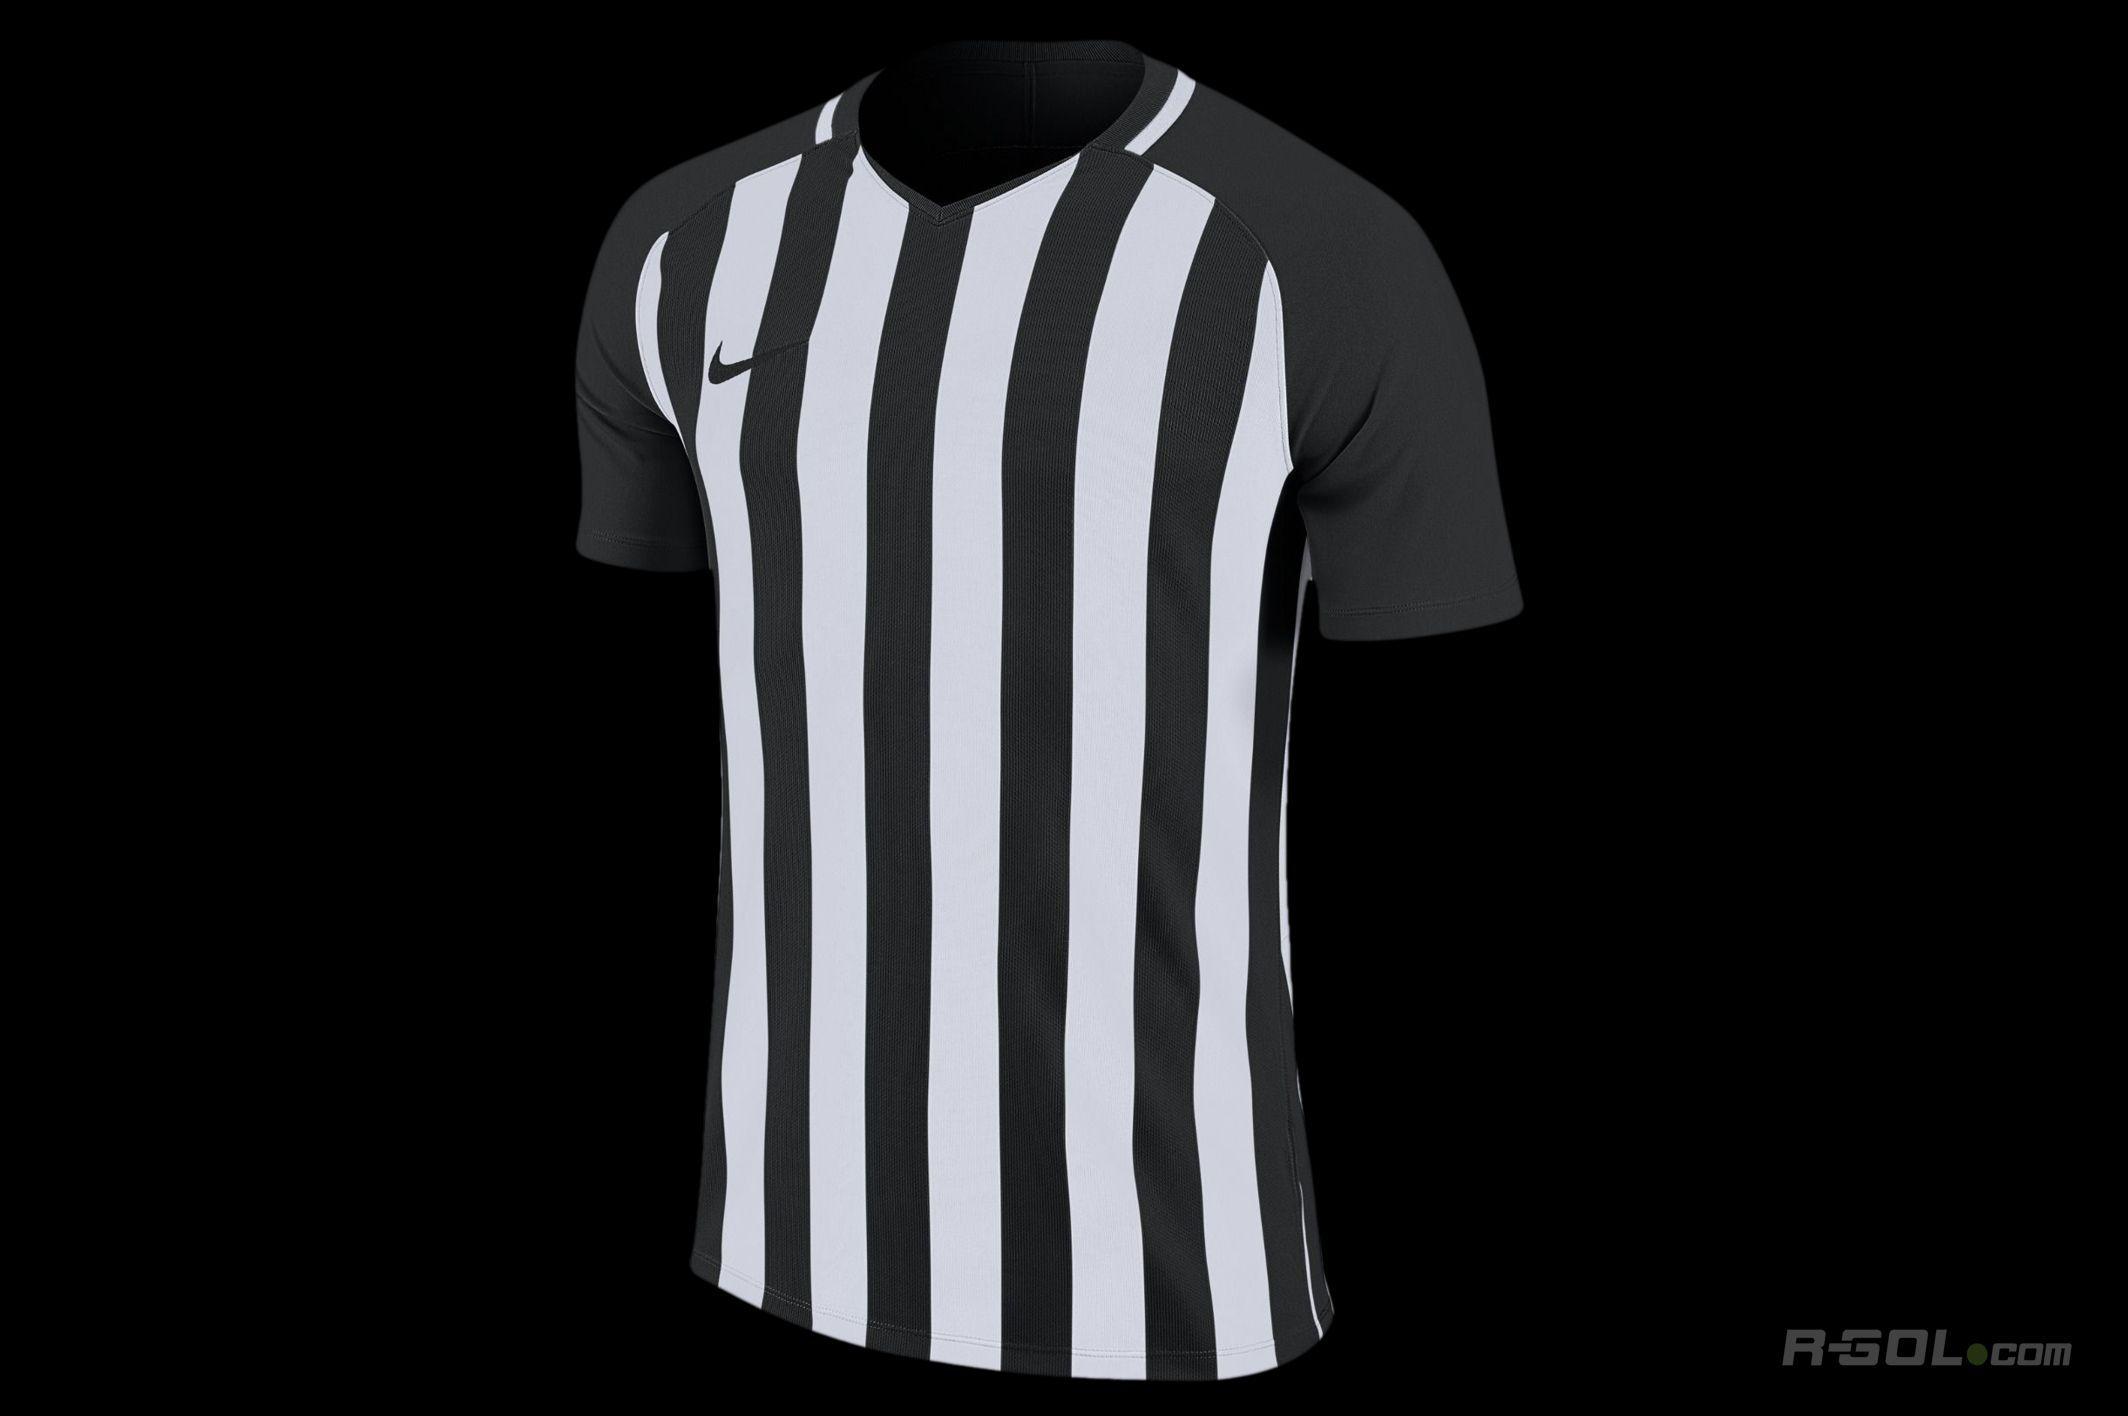 Black White and the Division Logo - Nike Striped Division Black White Long Sleeve Football Shirt